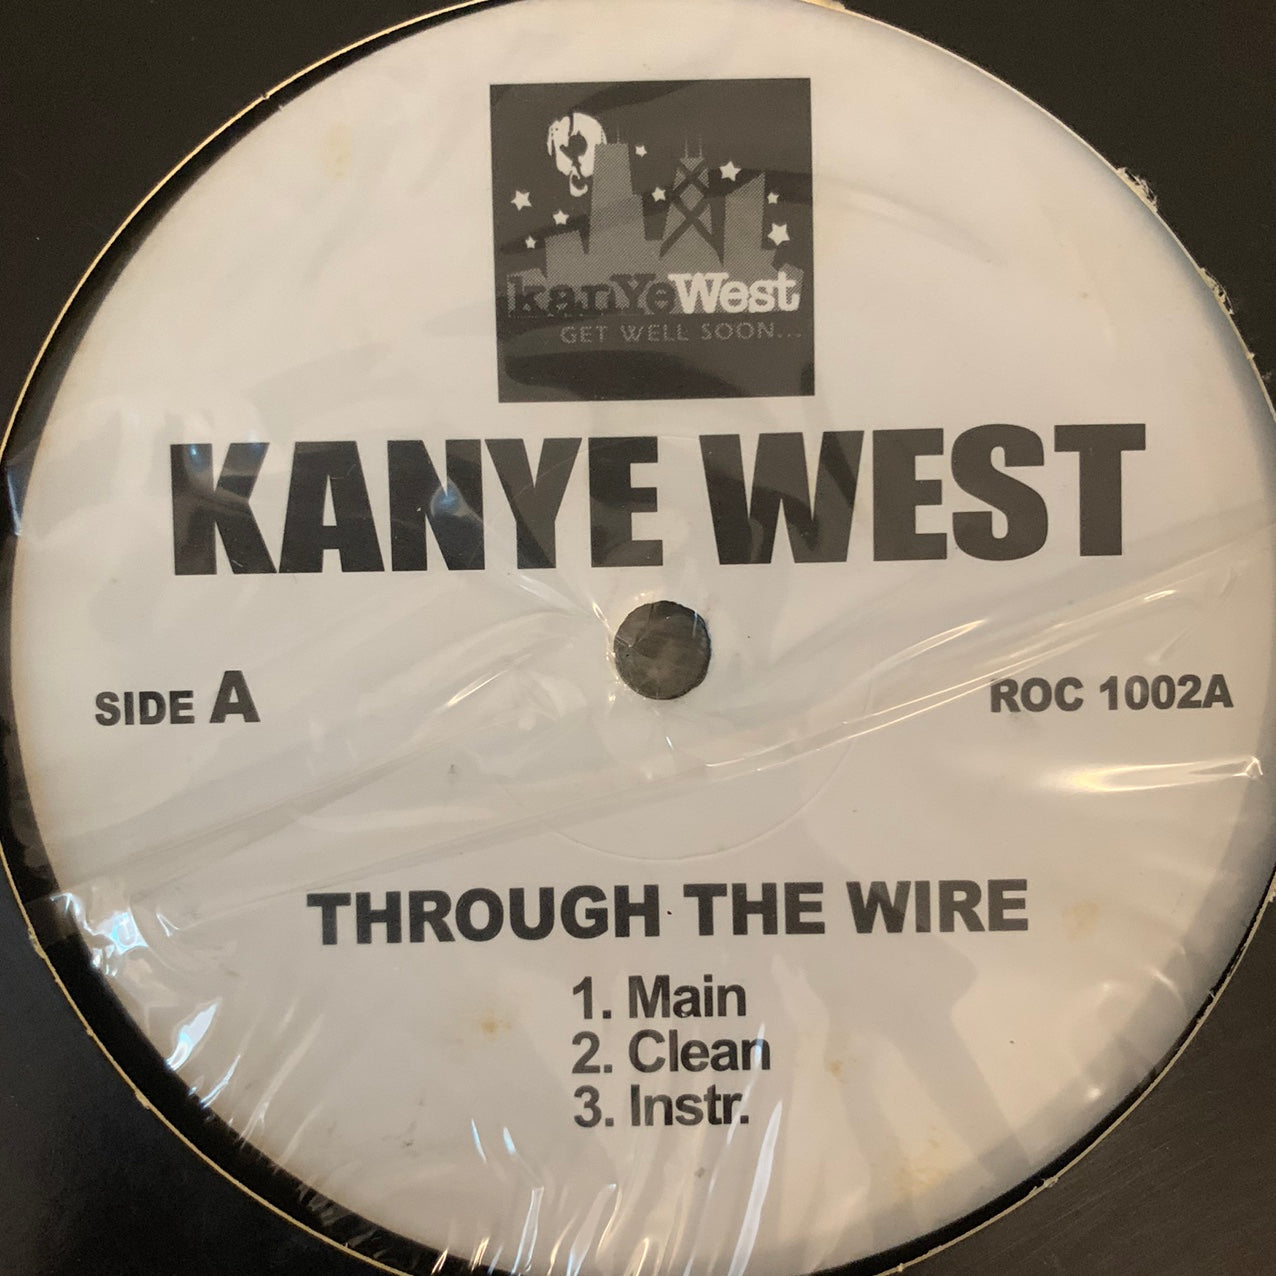 Kanye West “Through the wire” / “2 Words” 6 Version 12inch Vinyl